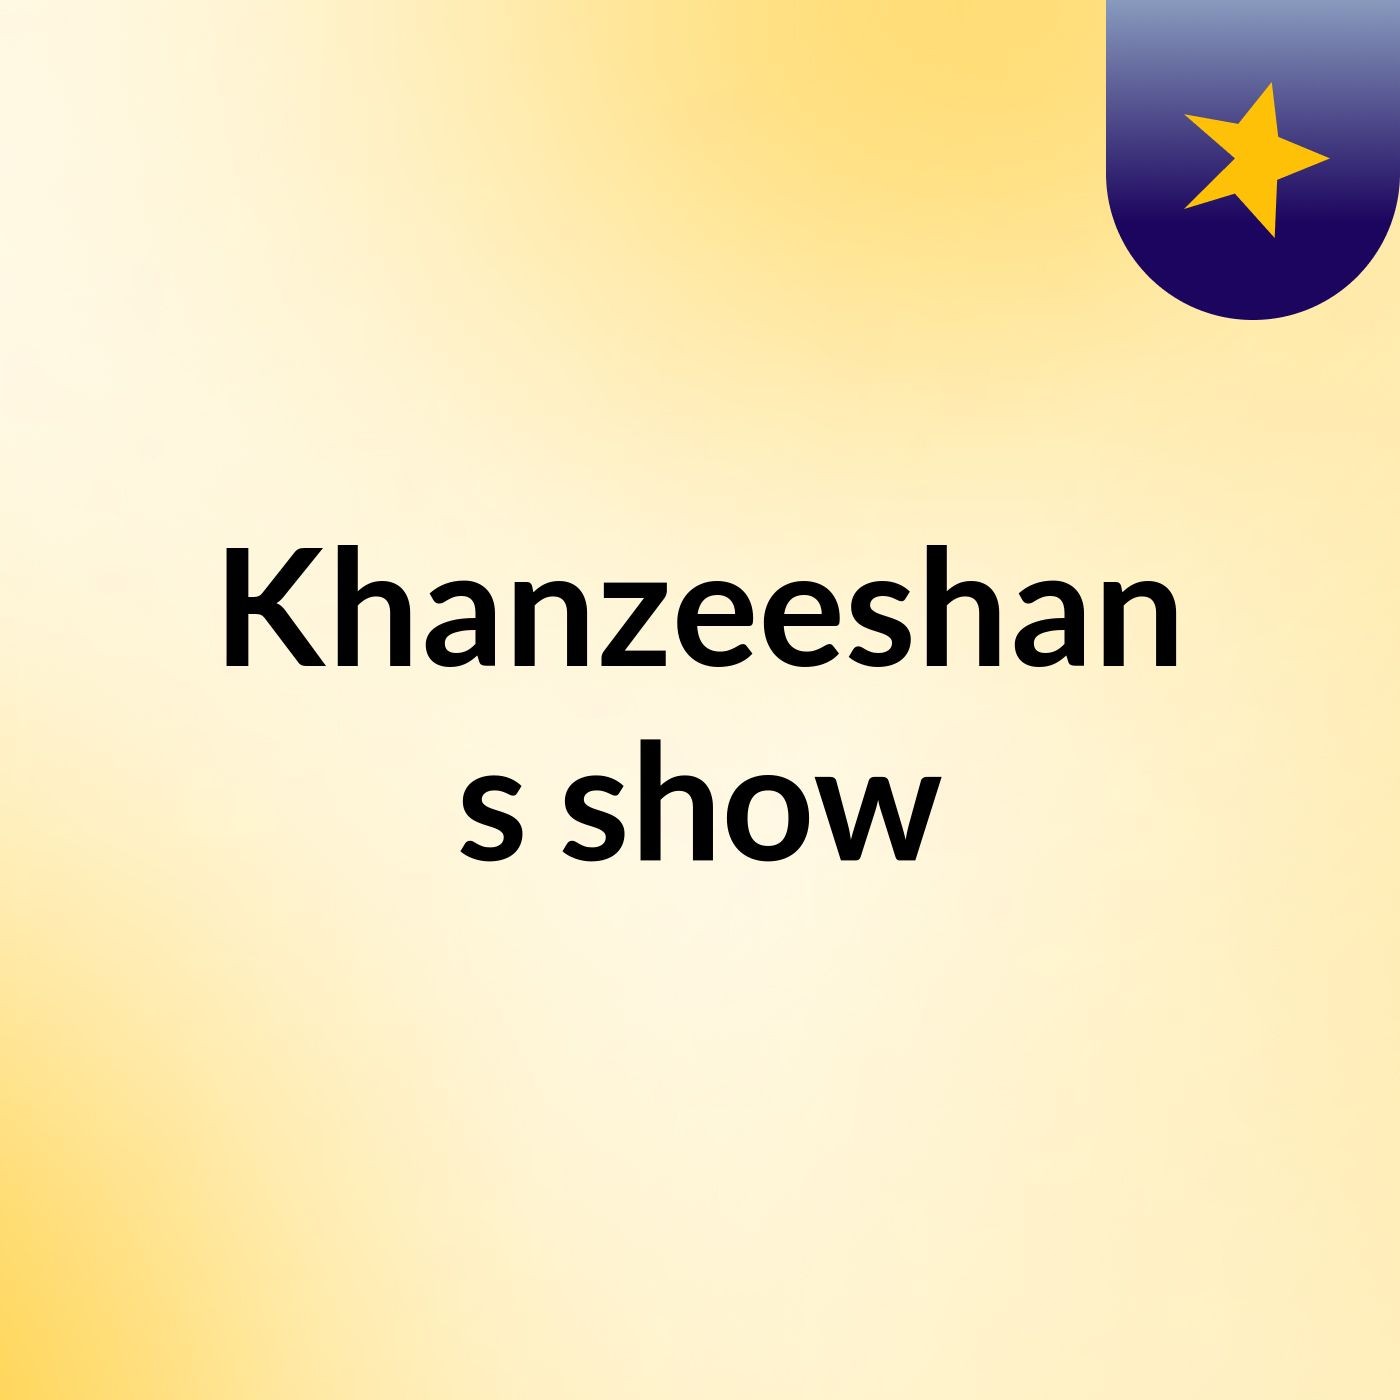 Khanzeeshan's show